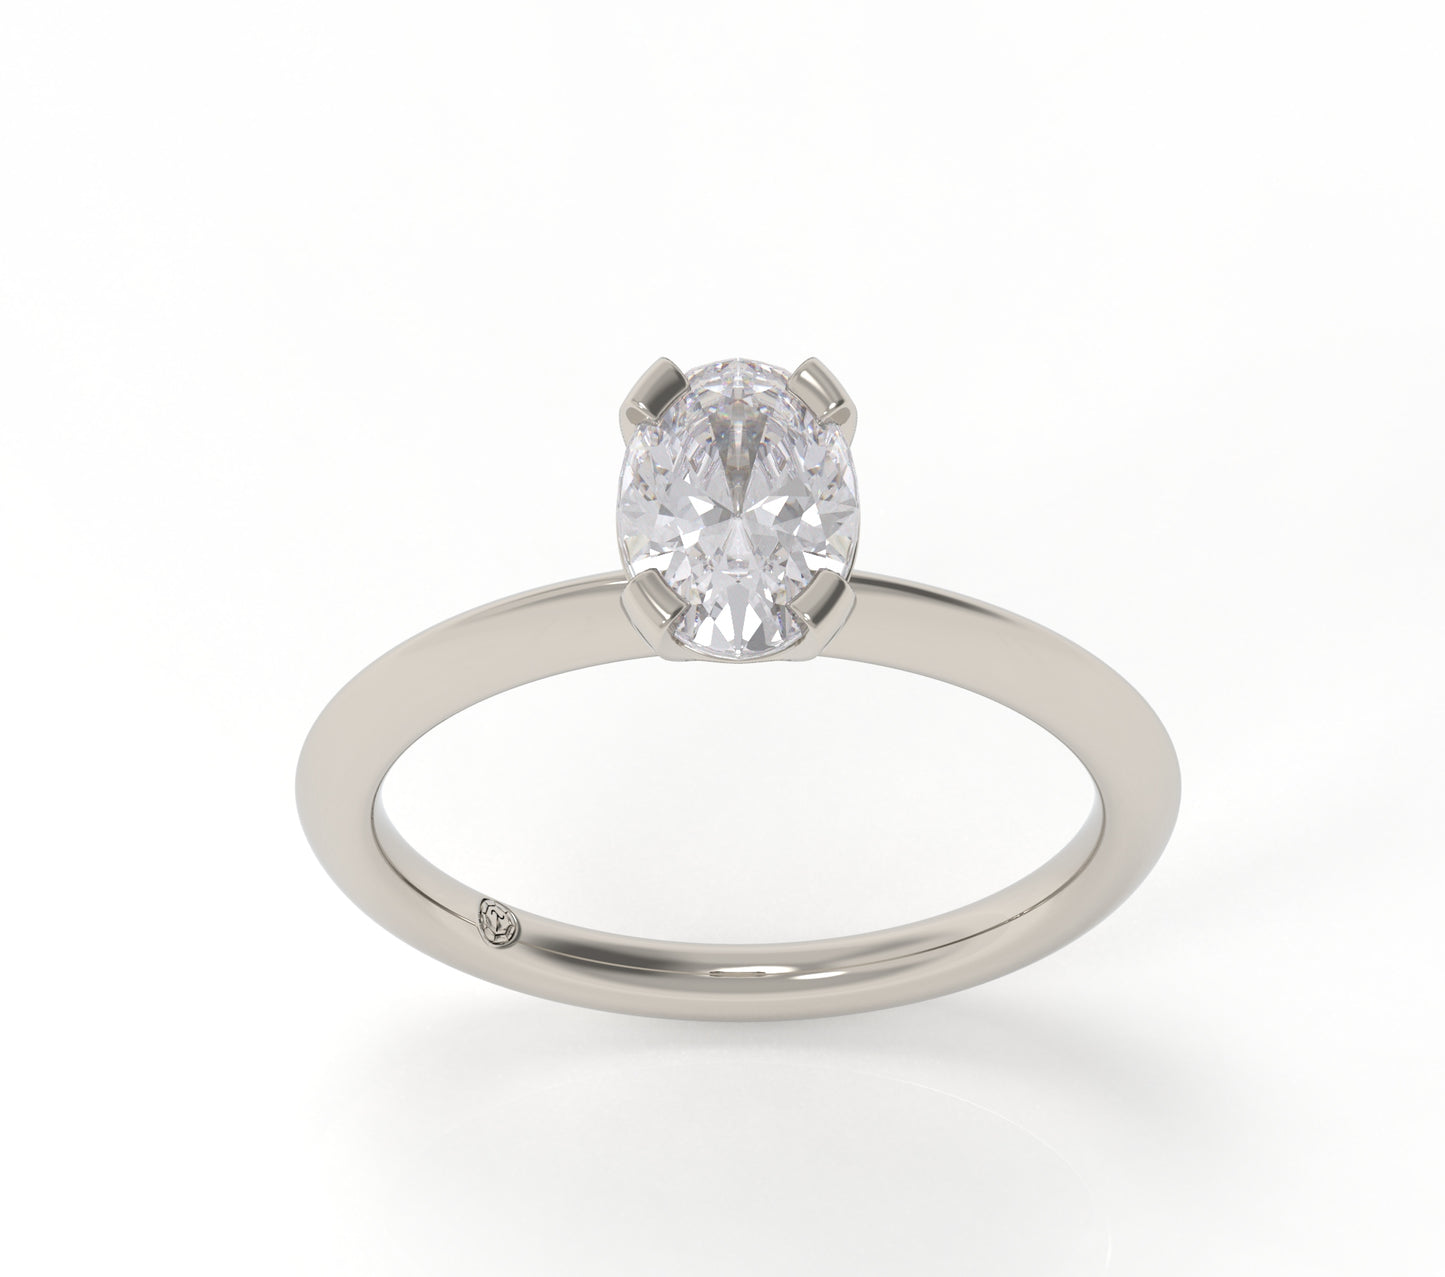 $1k 1ct Engagement Ring - Oval Diamond